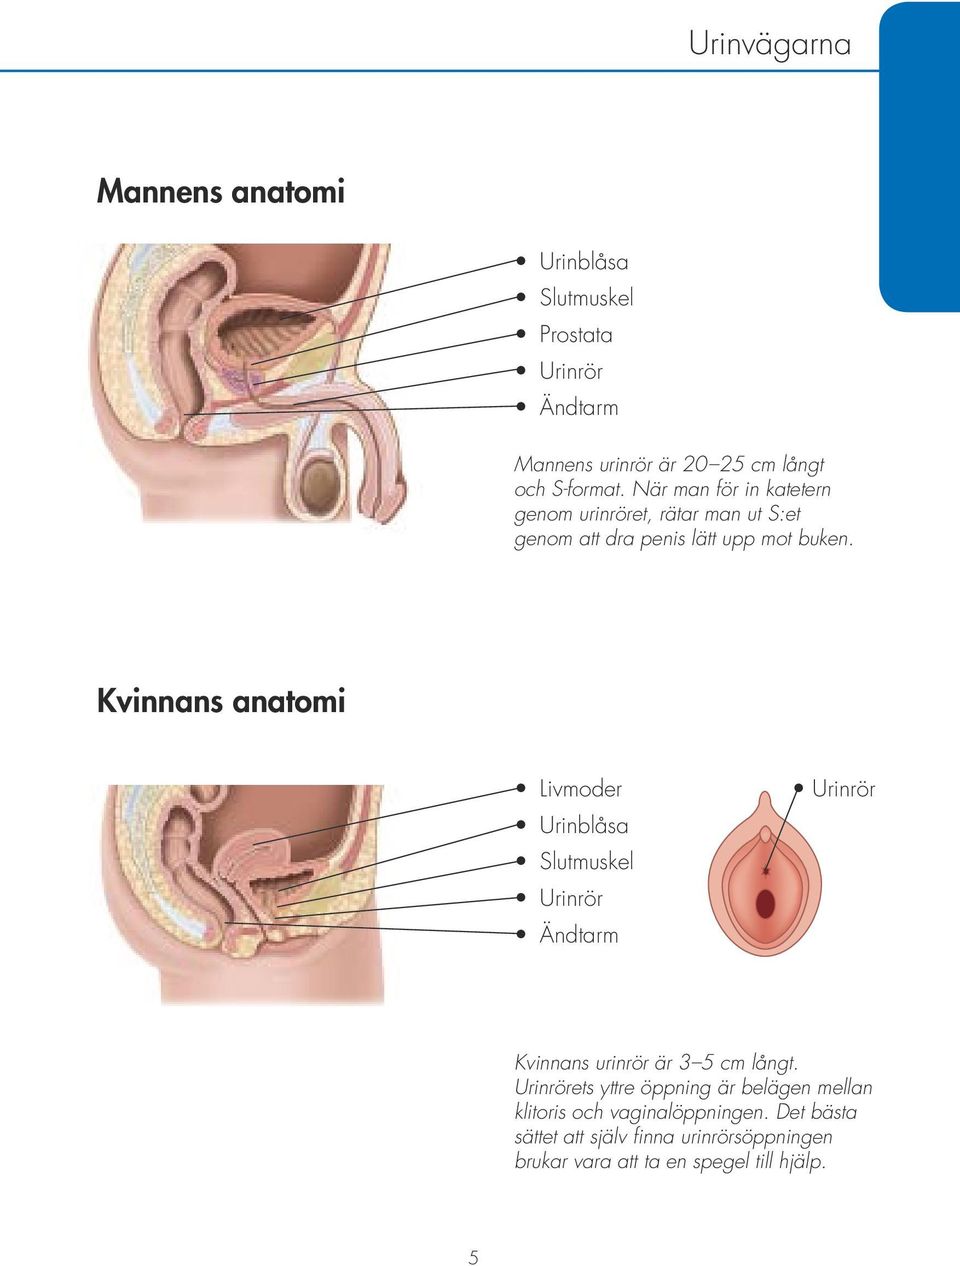 Kvinnans anatomi Livmoder Urinblåsa Slutmuskel Urinrör Ändtarm Urinrör Kvinnans urinrör är 3 5 cm långt.